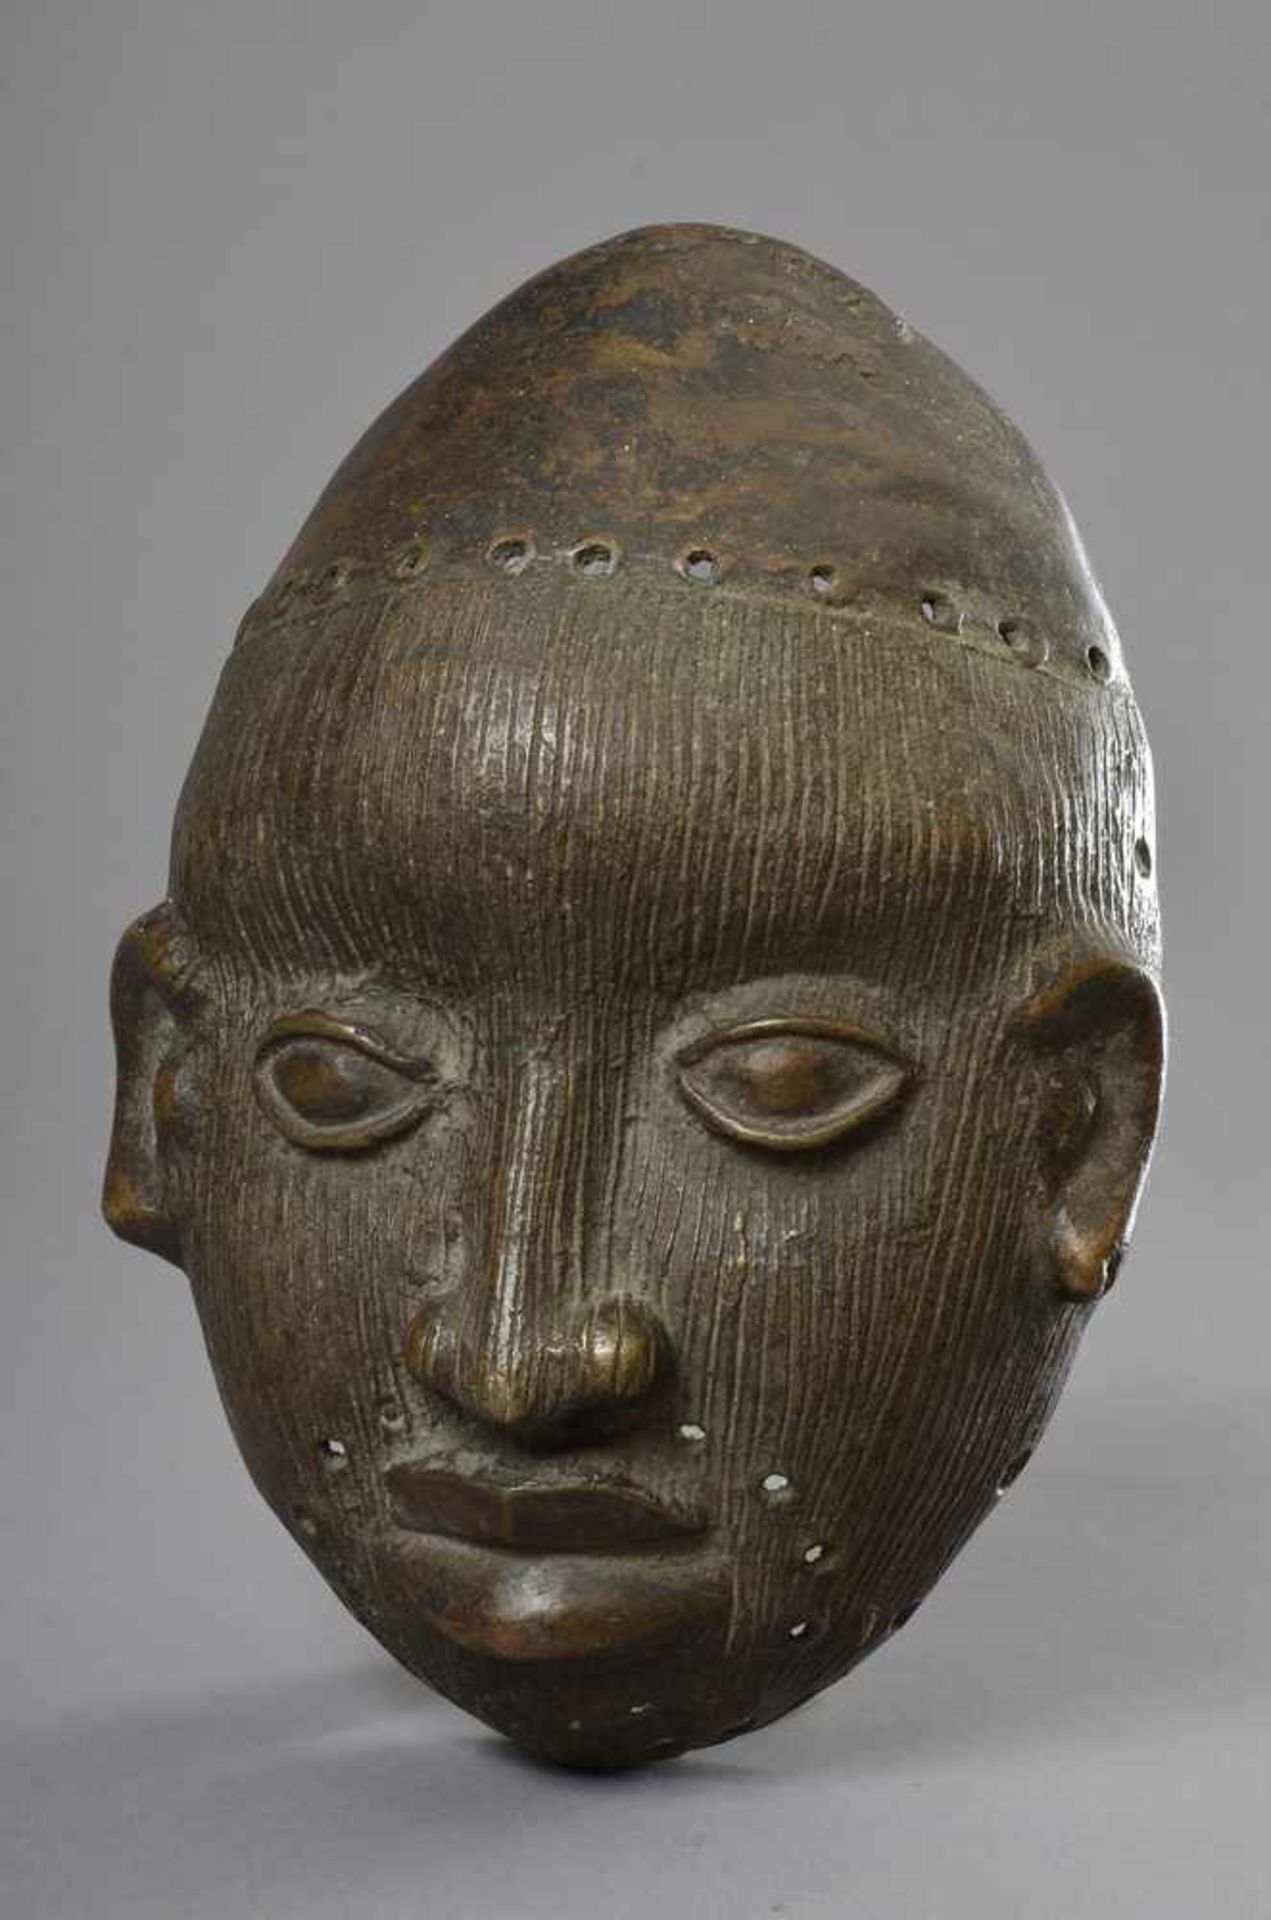 Benin Bronze Maske mit schöner Patina, wohl Museumsabguss, frühes 20.Jh., 29,5x20cm